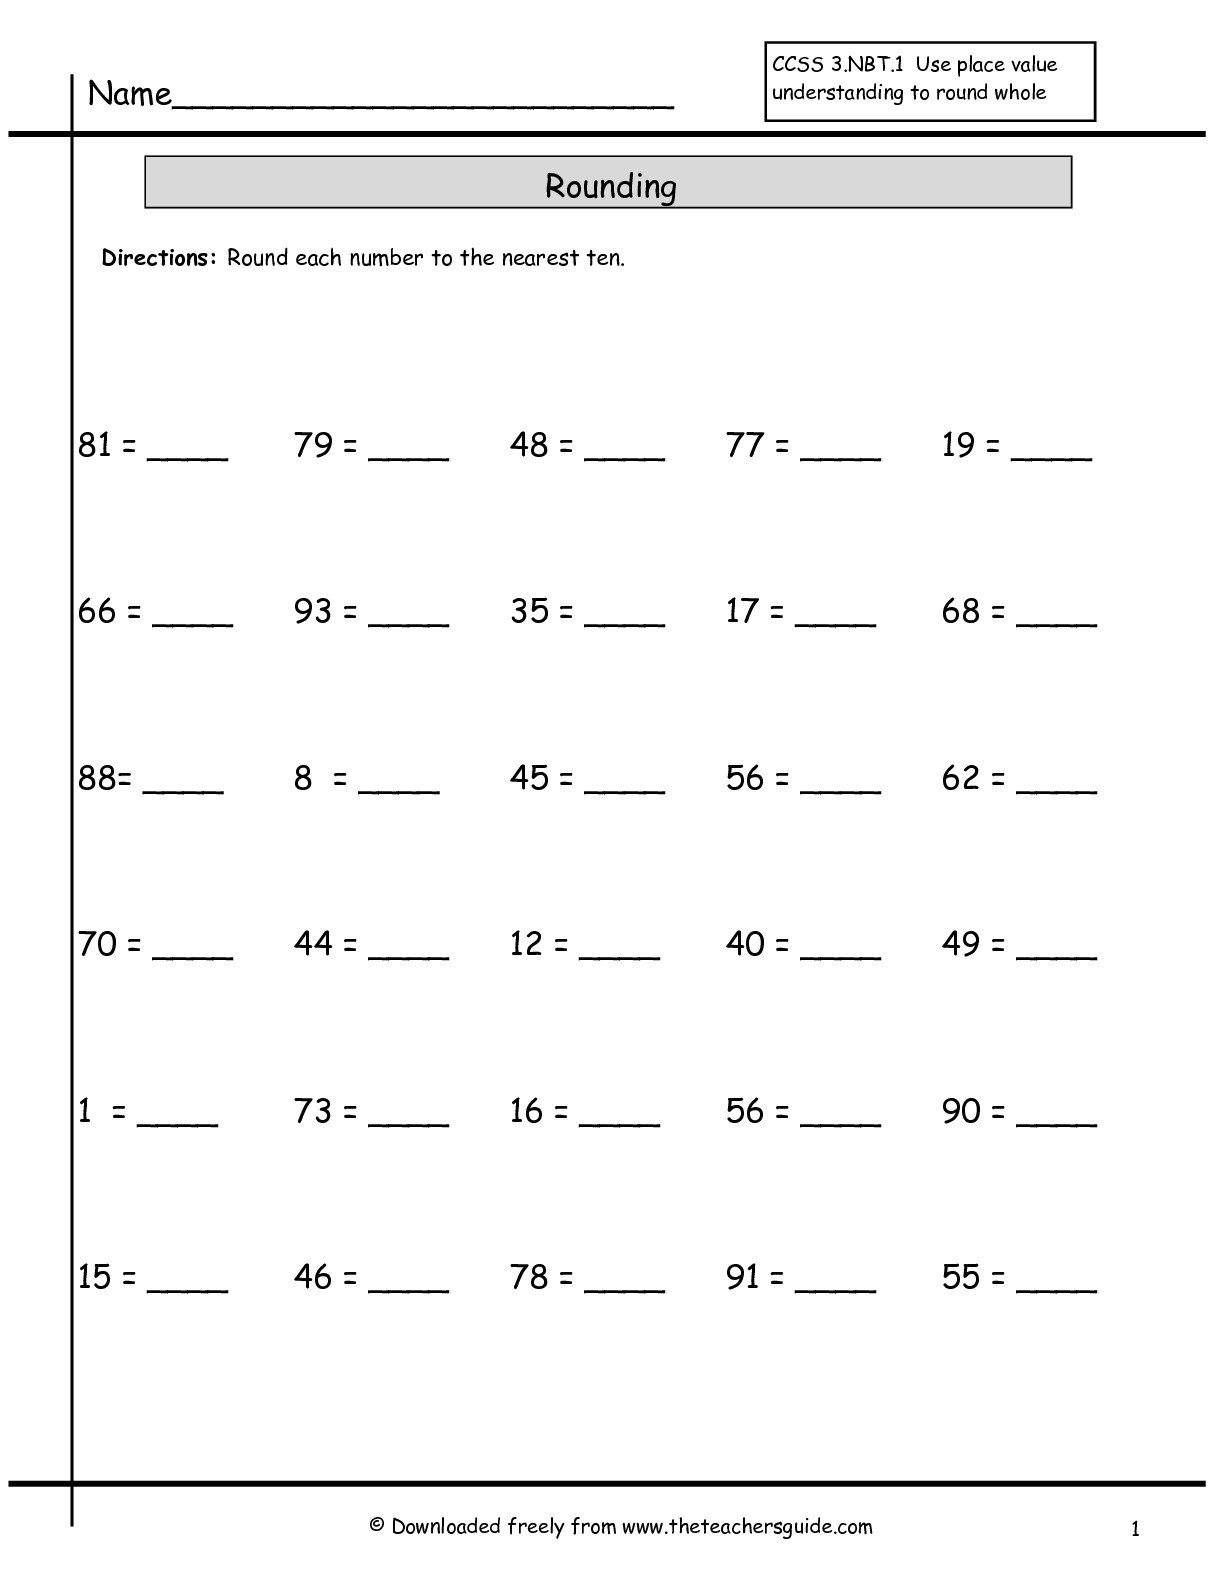 rounding-off-worksheets-grade-5